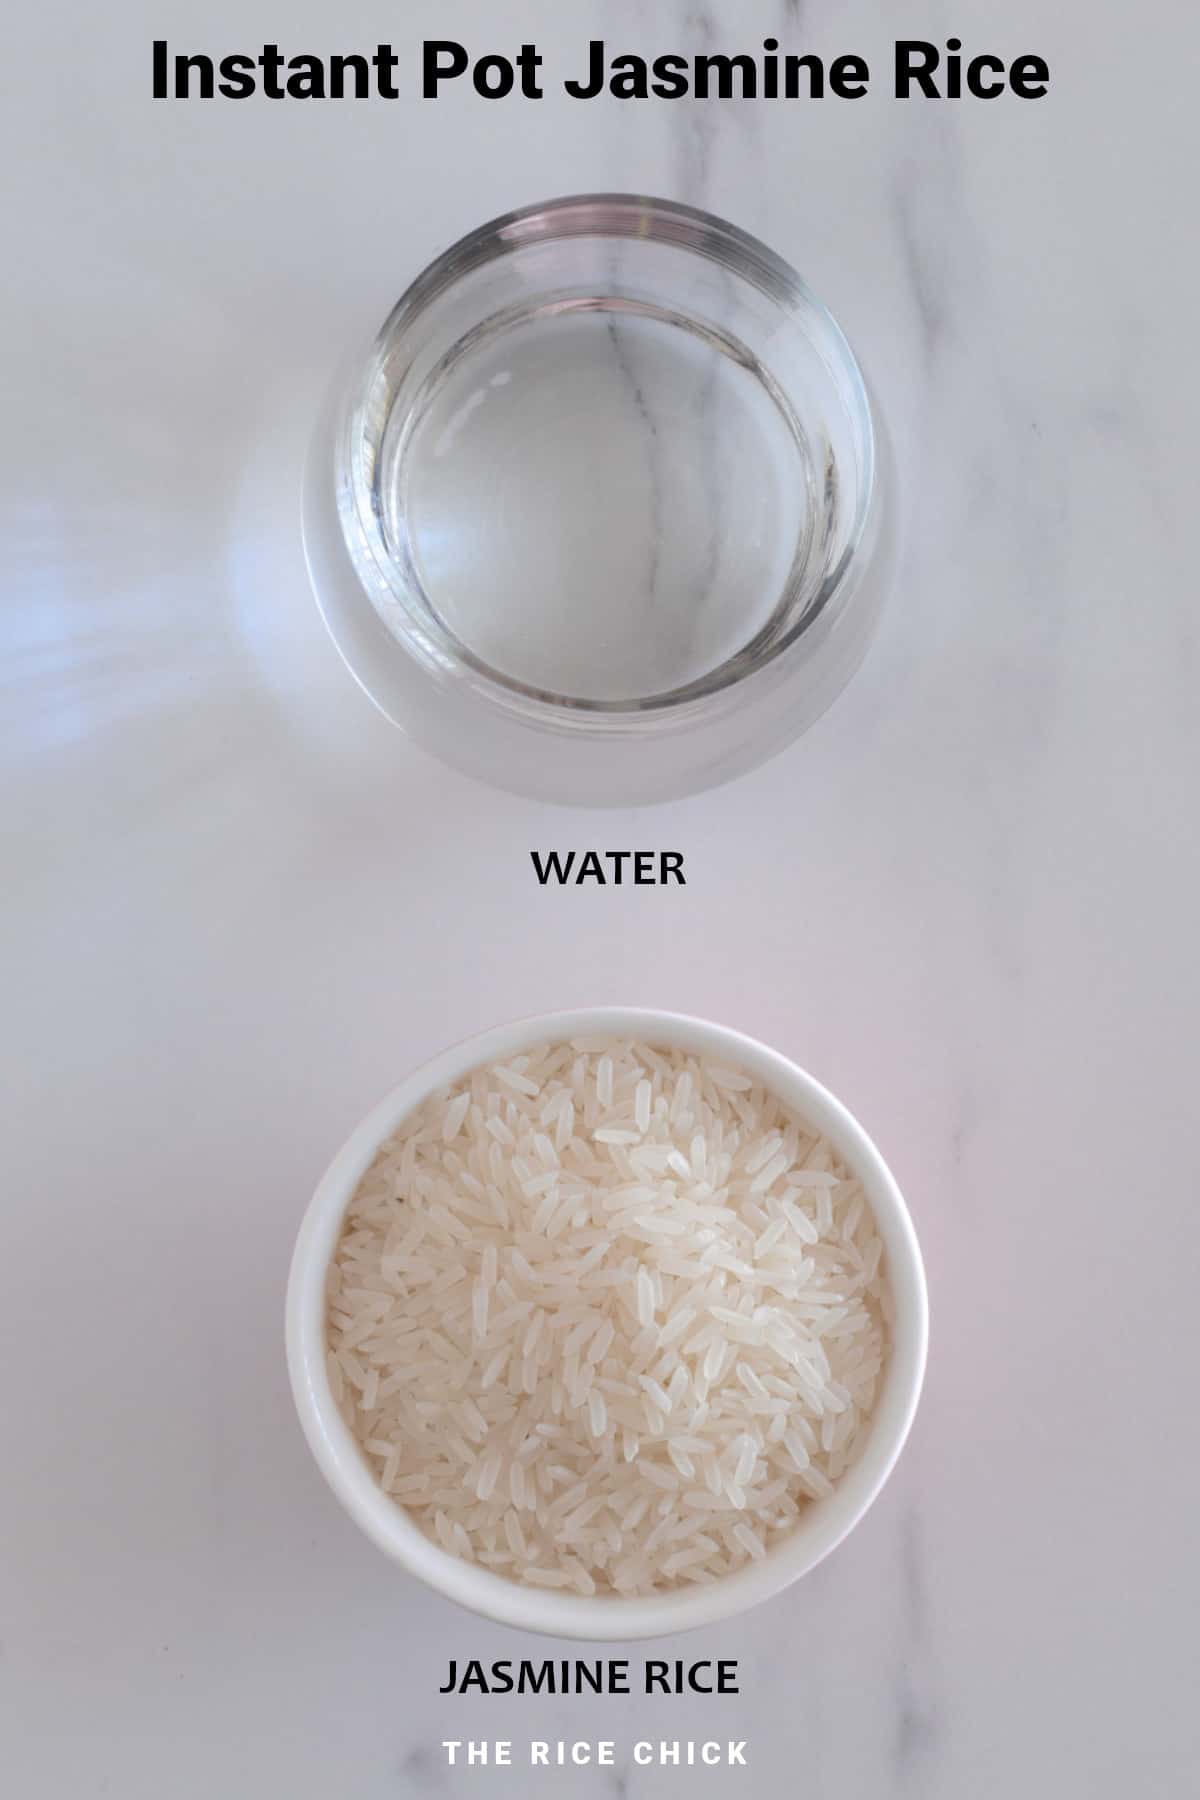 Ingredients for instant pot jasmine rice.